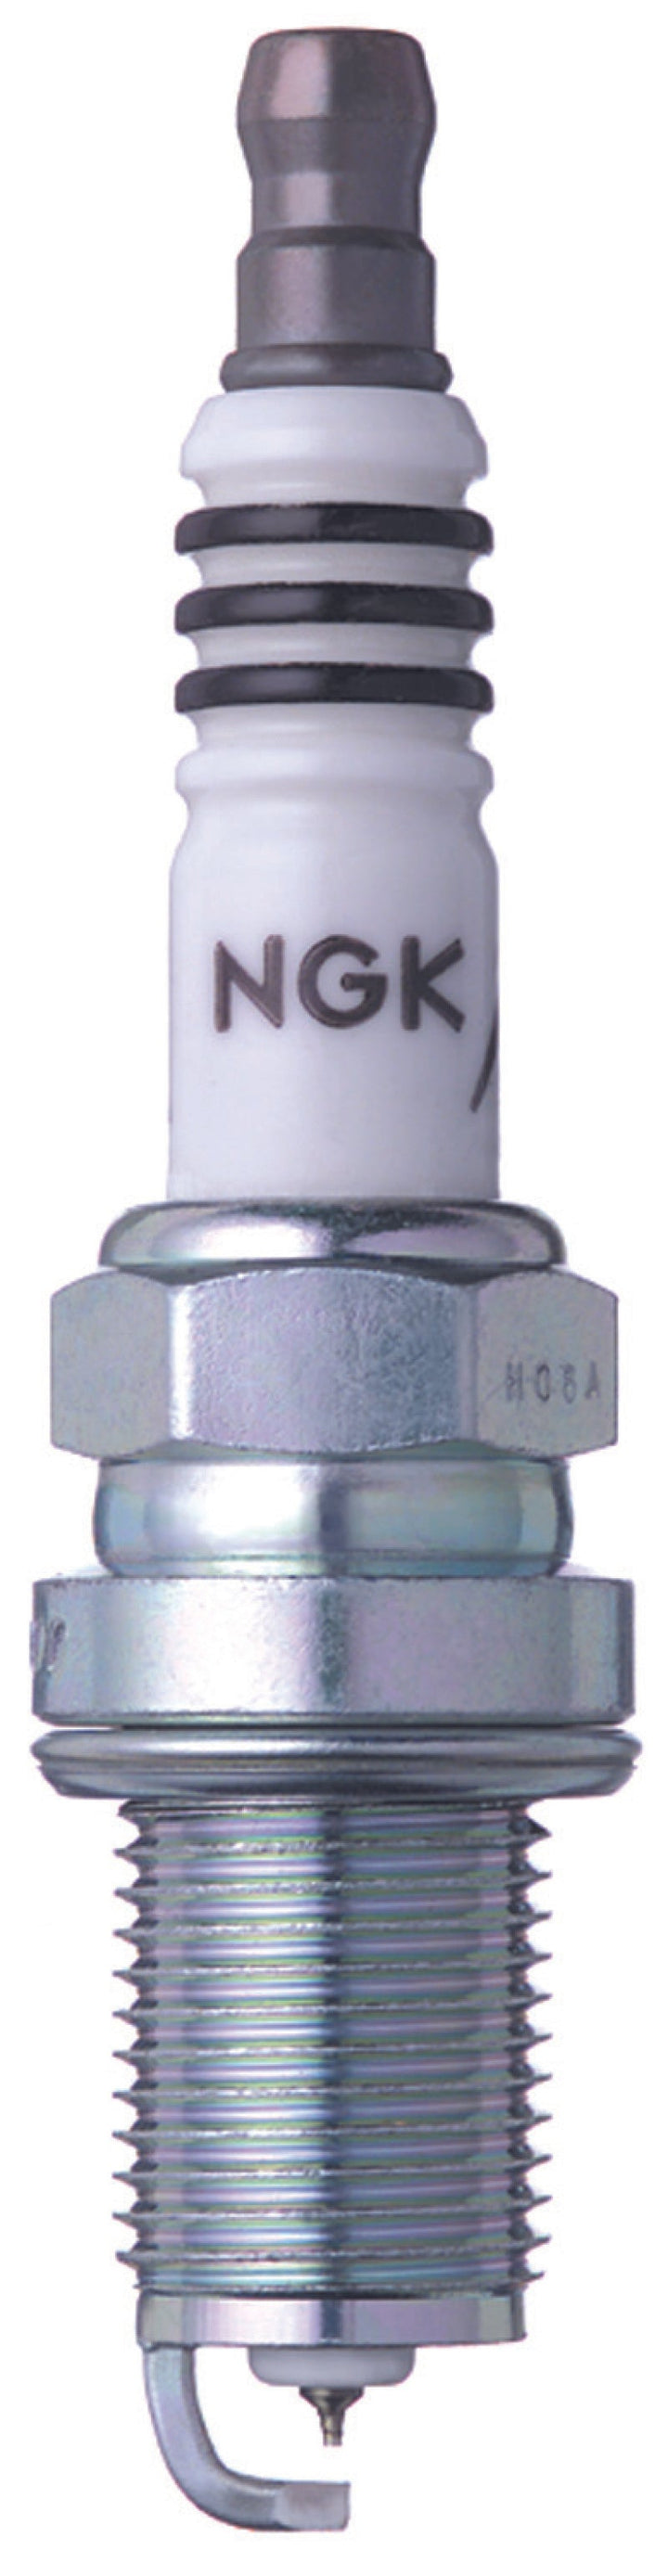 NGK Iridium Spark Plugs Box of 4 (BKR7EIX) - Premium Spark Plugs from NGK - Just 126.81 SR! Shop now at Motors